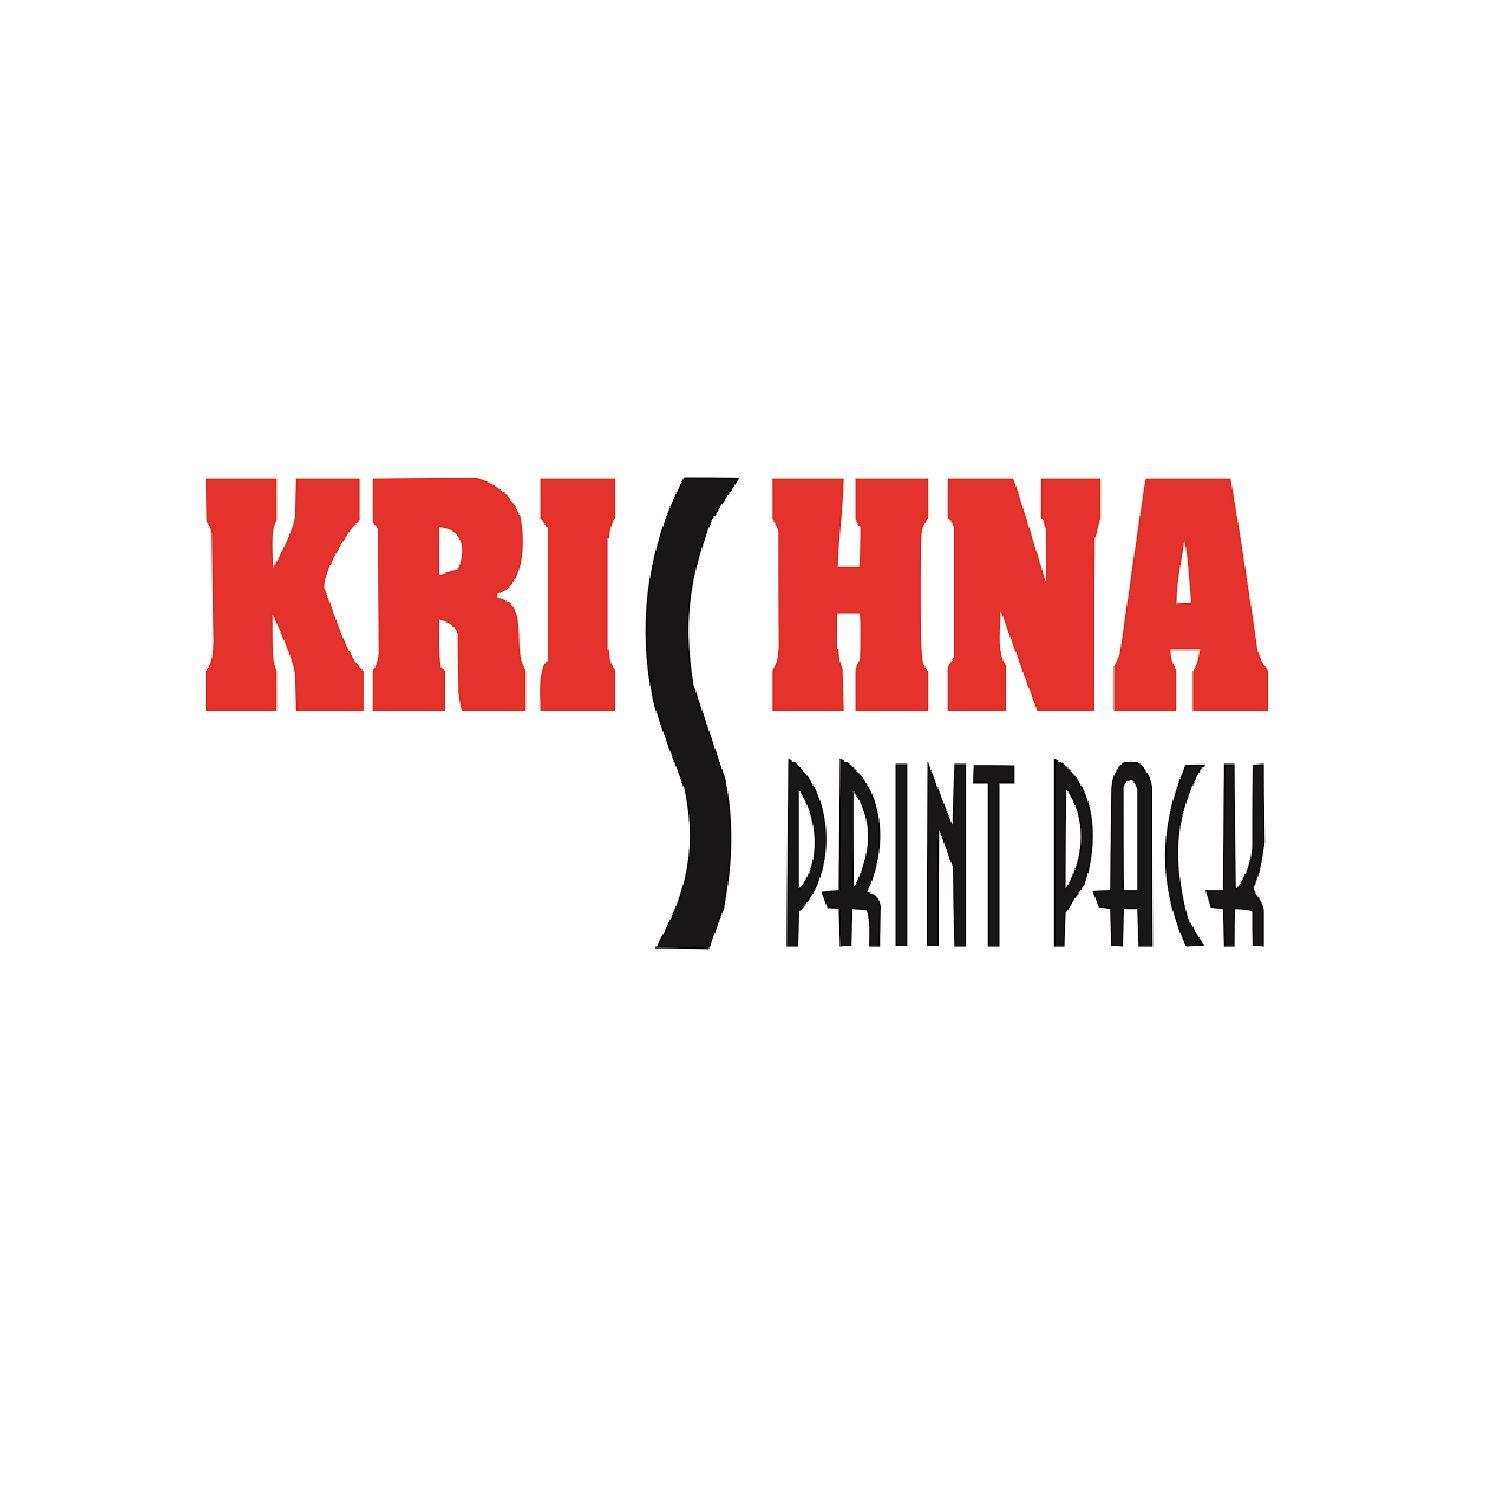 Krishna Print Pack